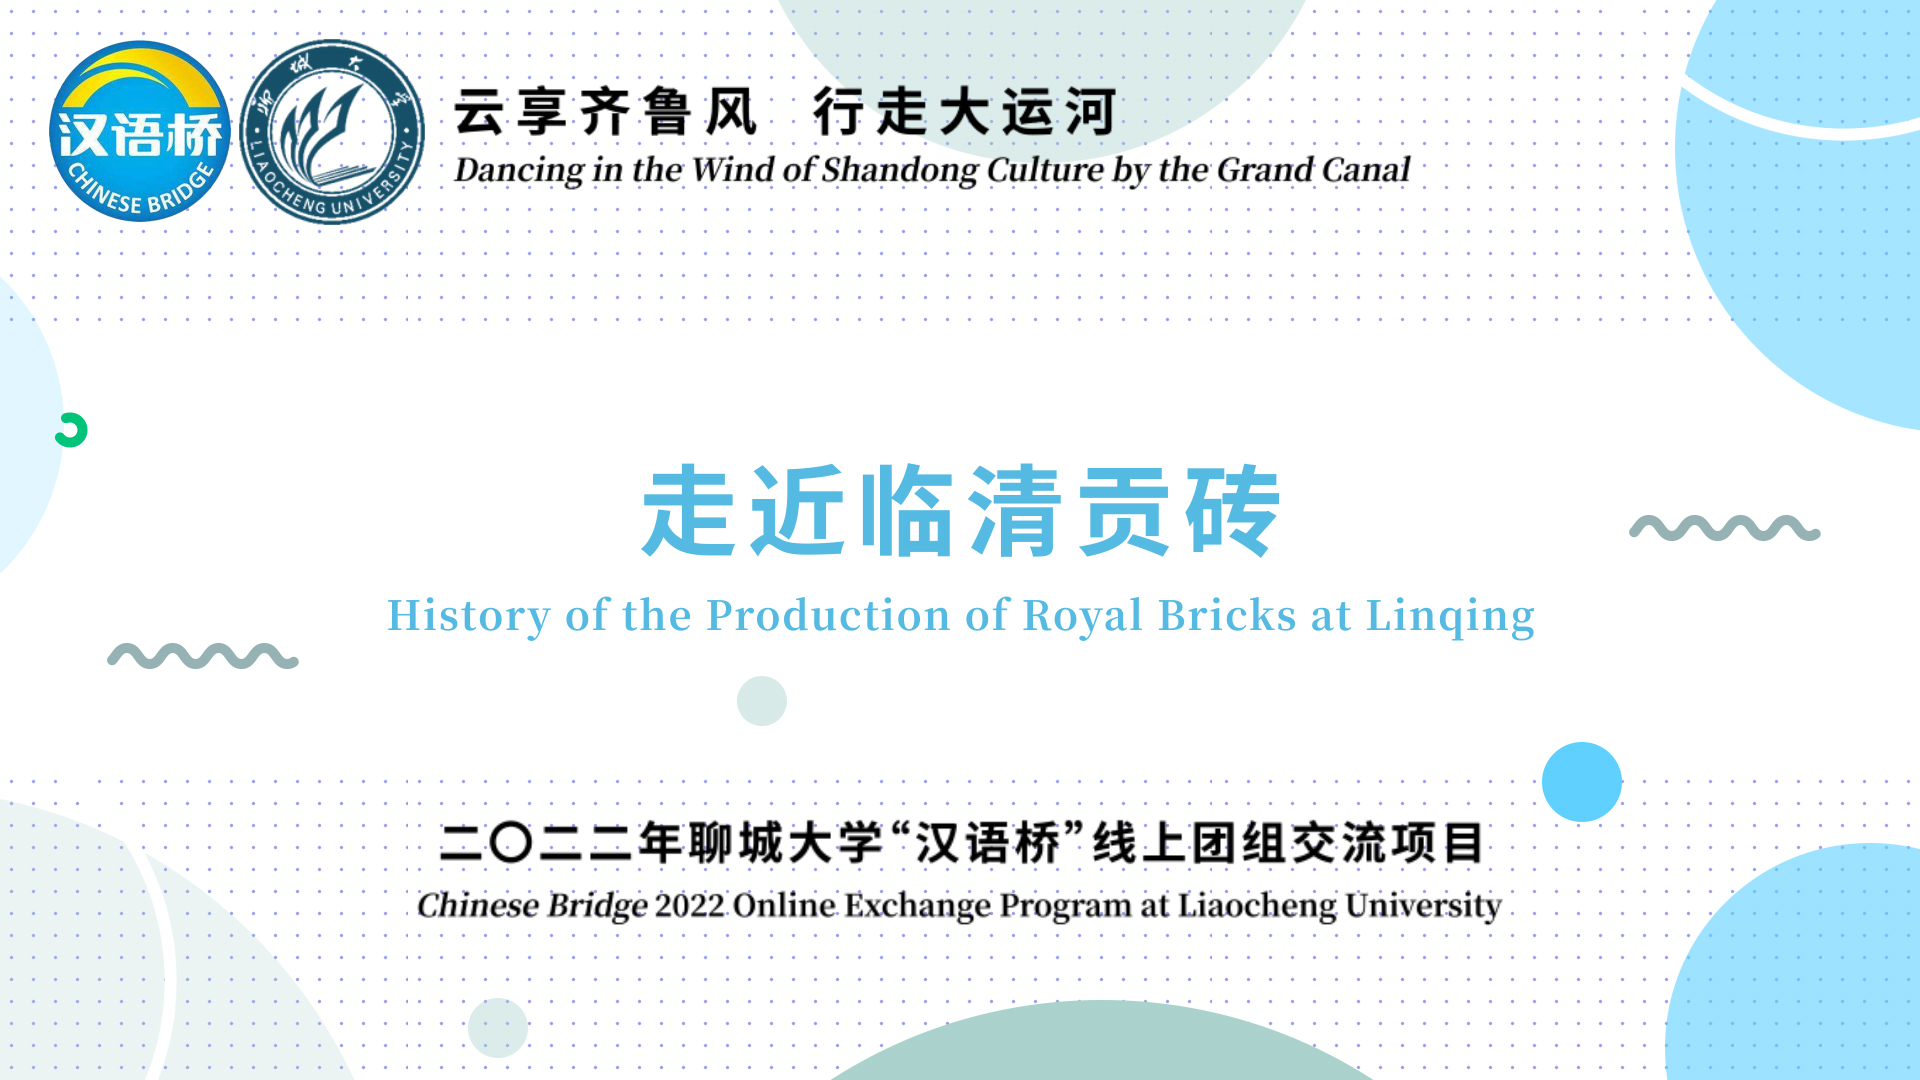 History of the Production of Royal Bricks at Linqing